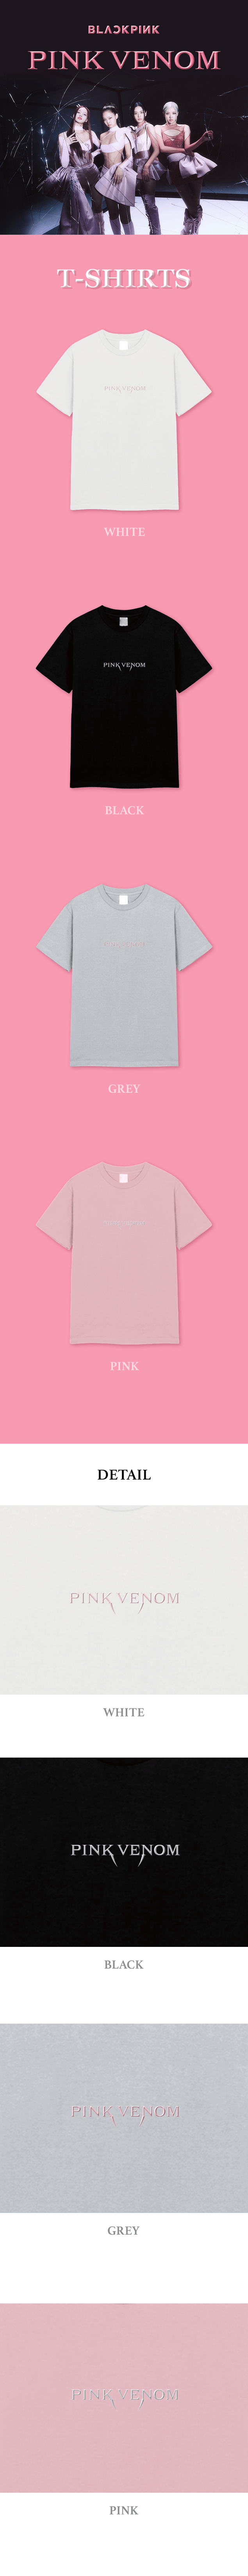 Camisetas Blackpink [Pink Venom]